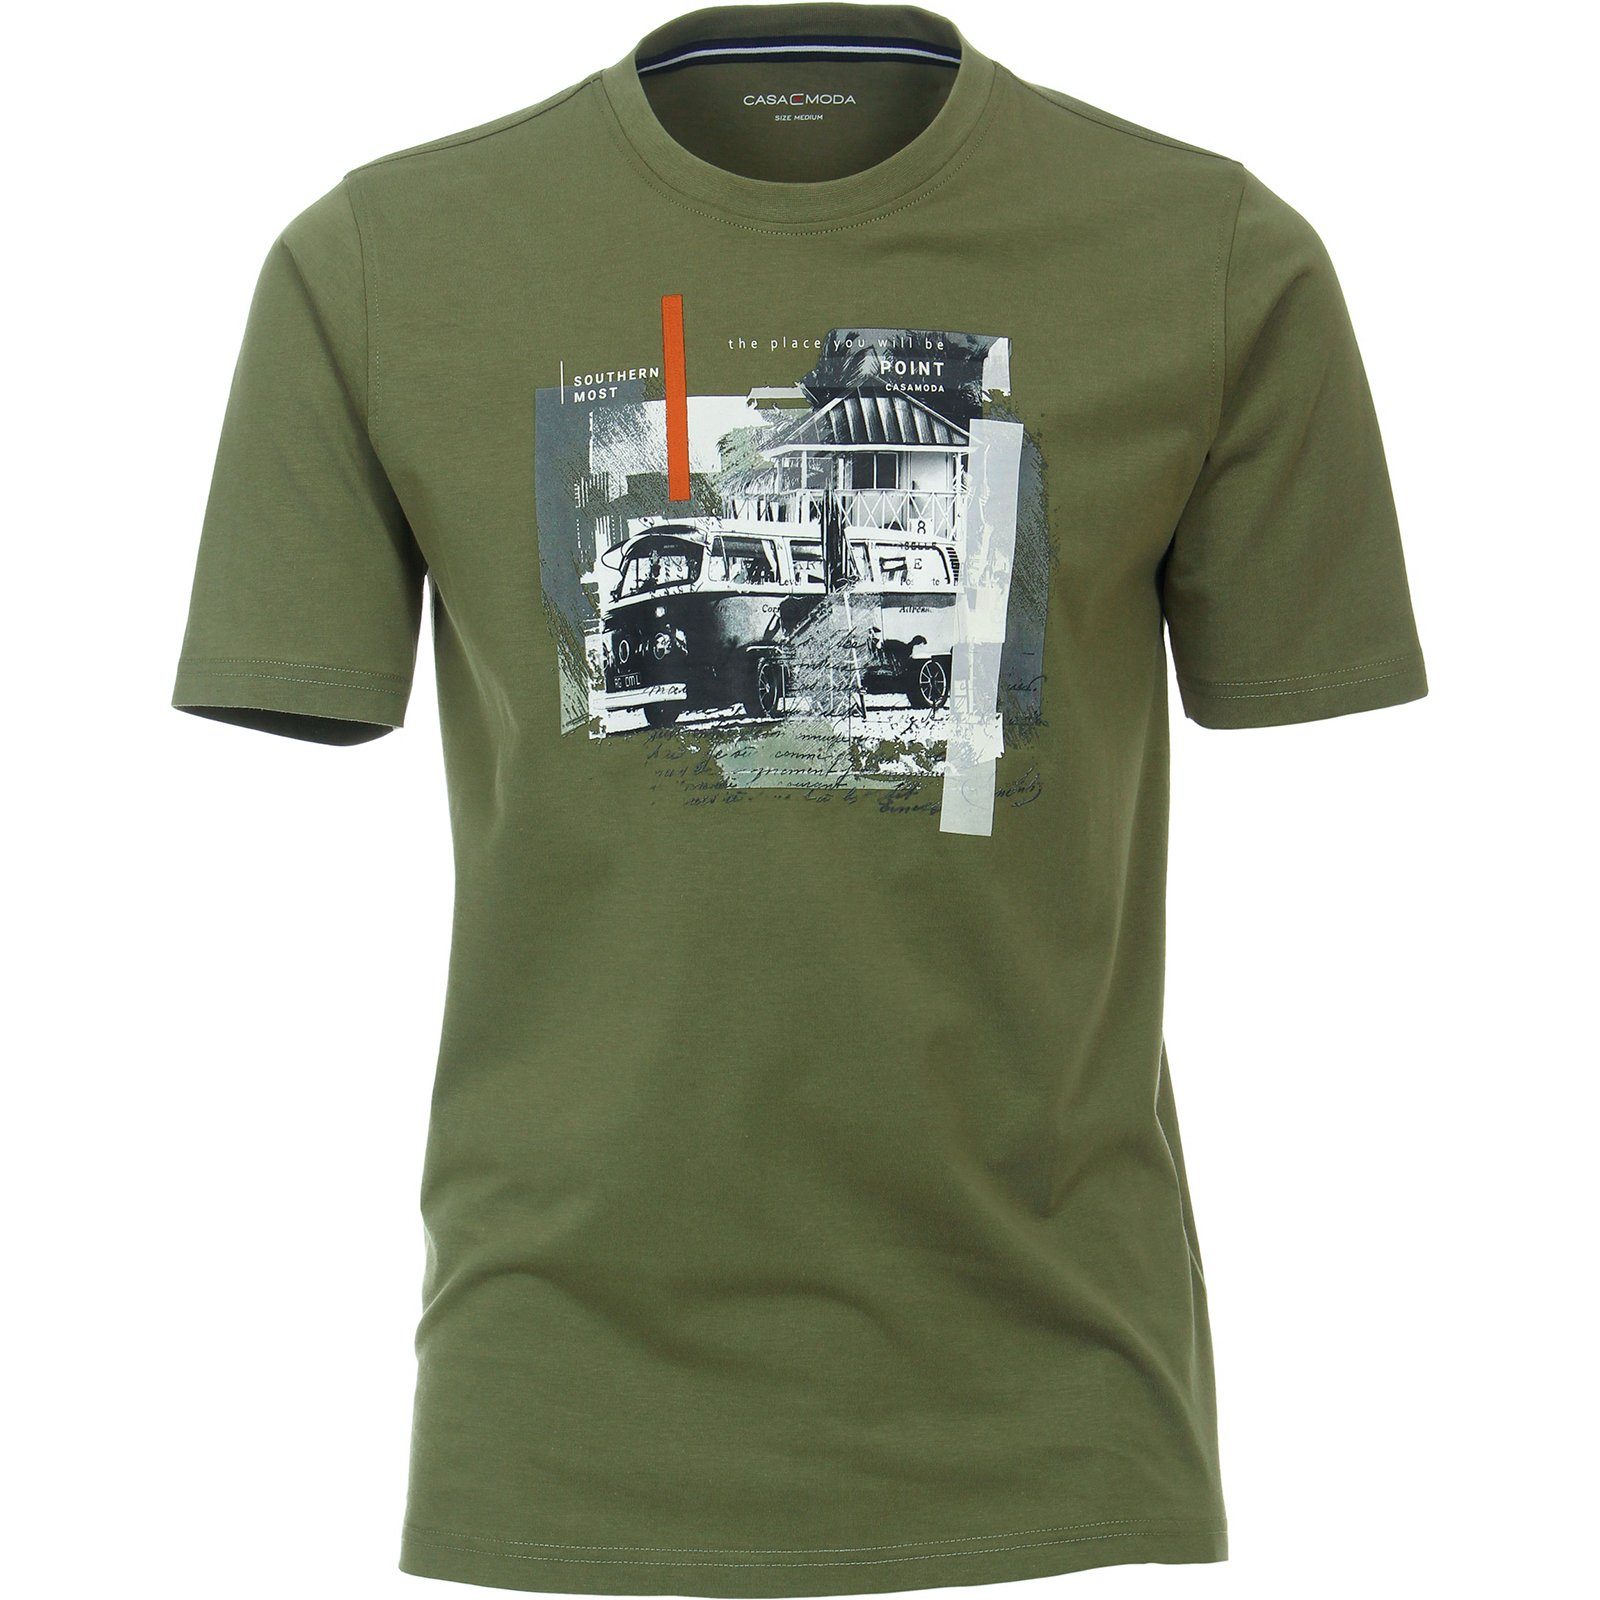 Florida-Print CASAMODA olivgrün T-Shirt Große CasaModa Herren Rundhalsshirt Größen